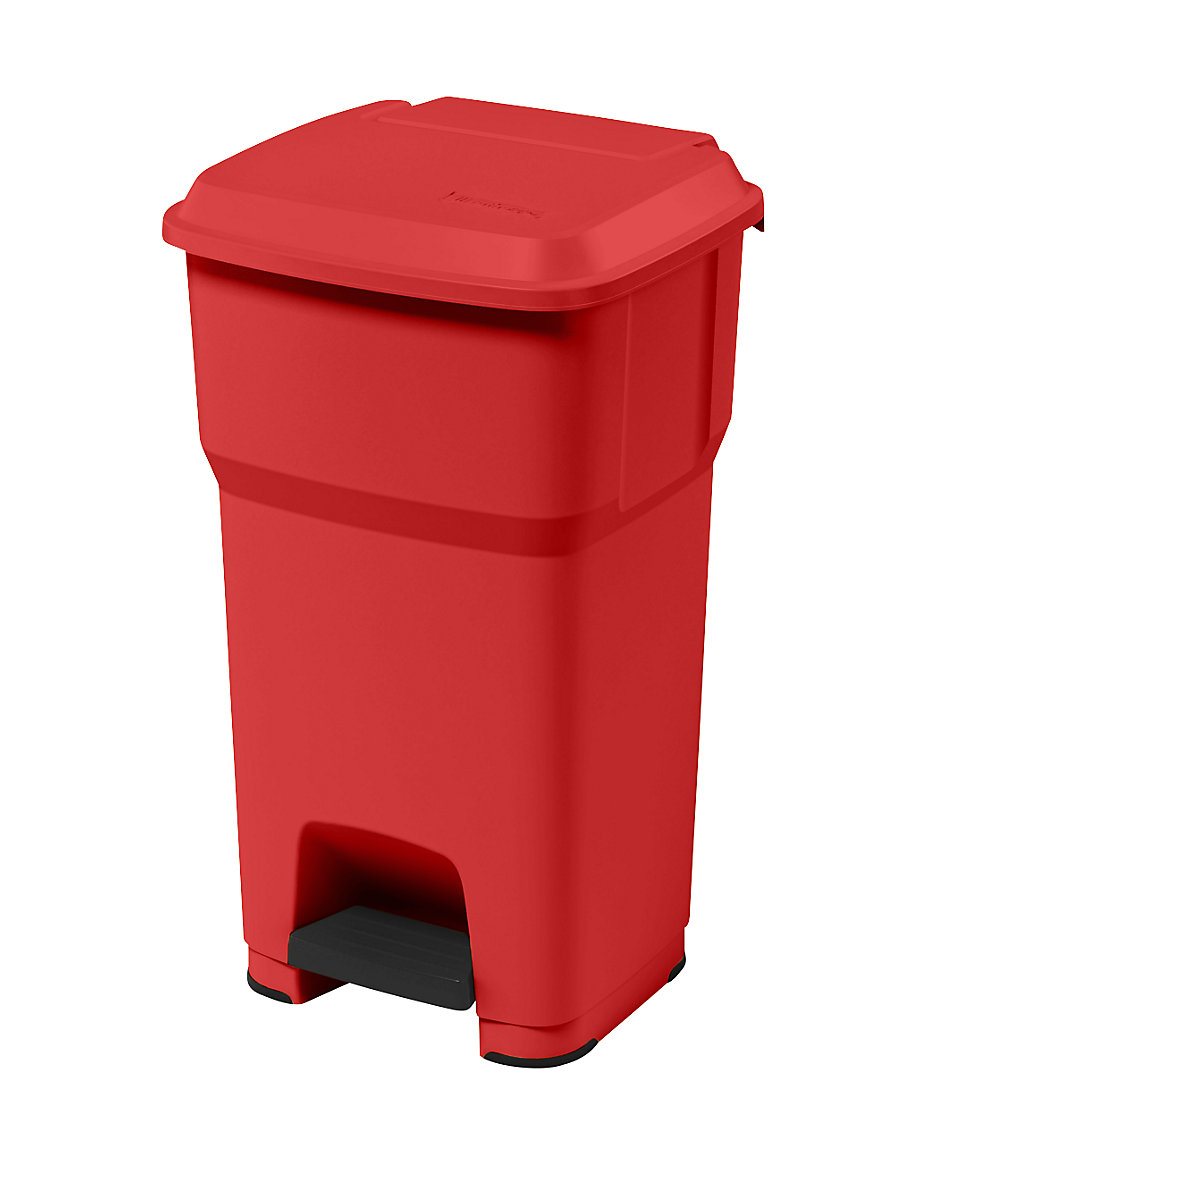 Coletor de lixo com pedal HERA – rothopro, volume 60 l, LxAxP 390 x 690 x 390 mm, vermelho-7